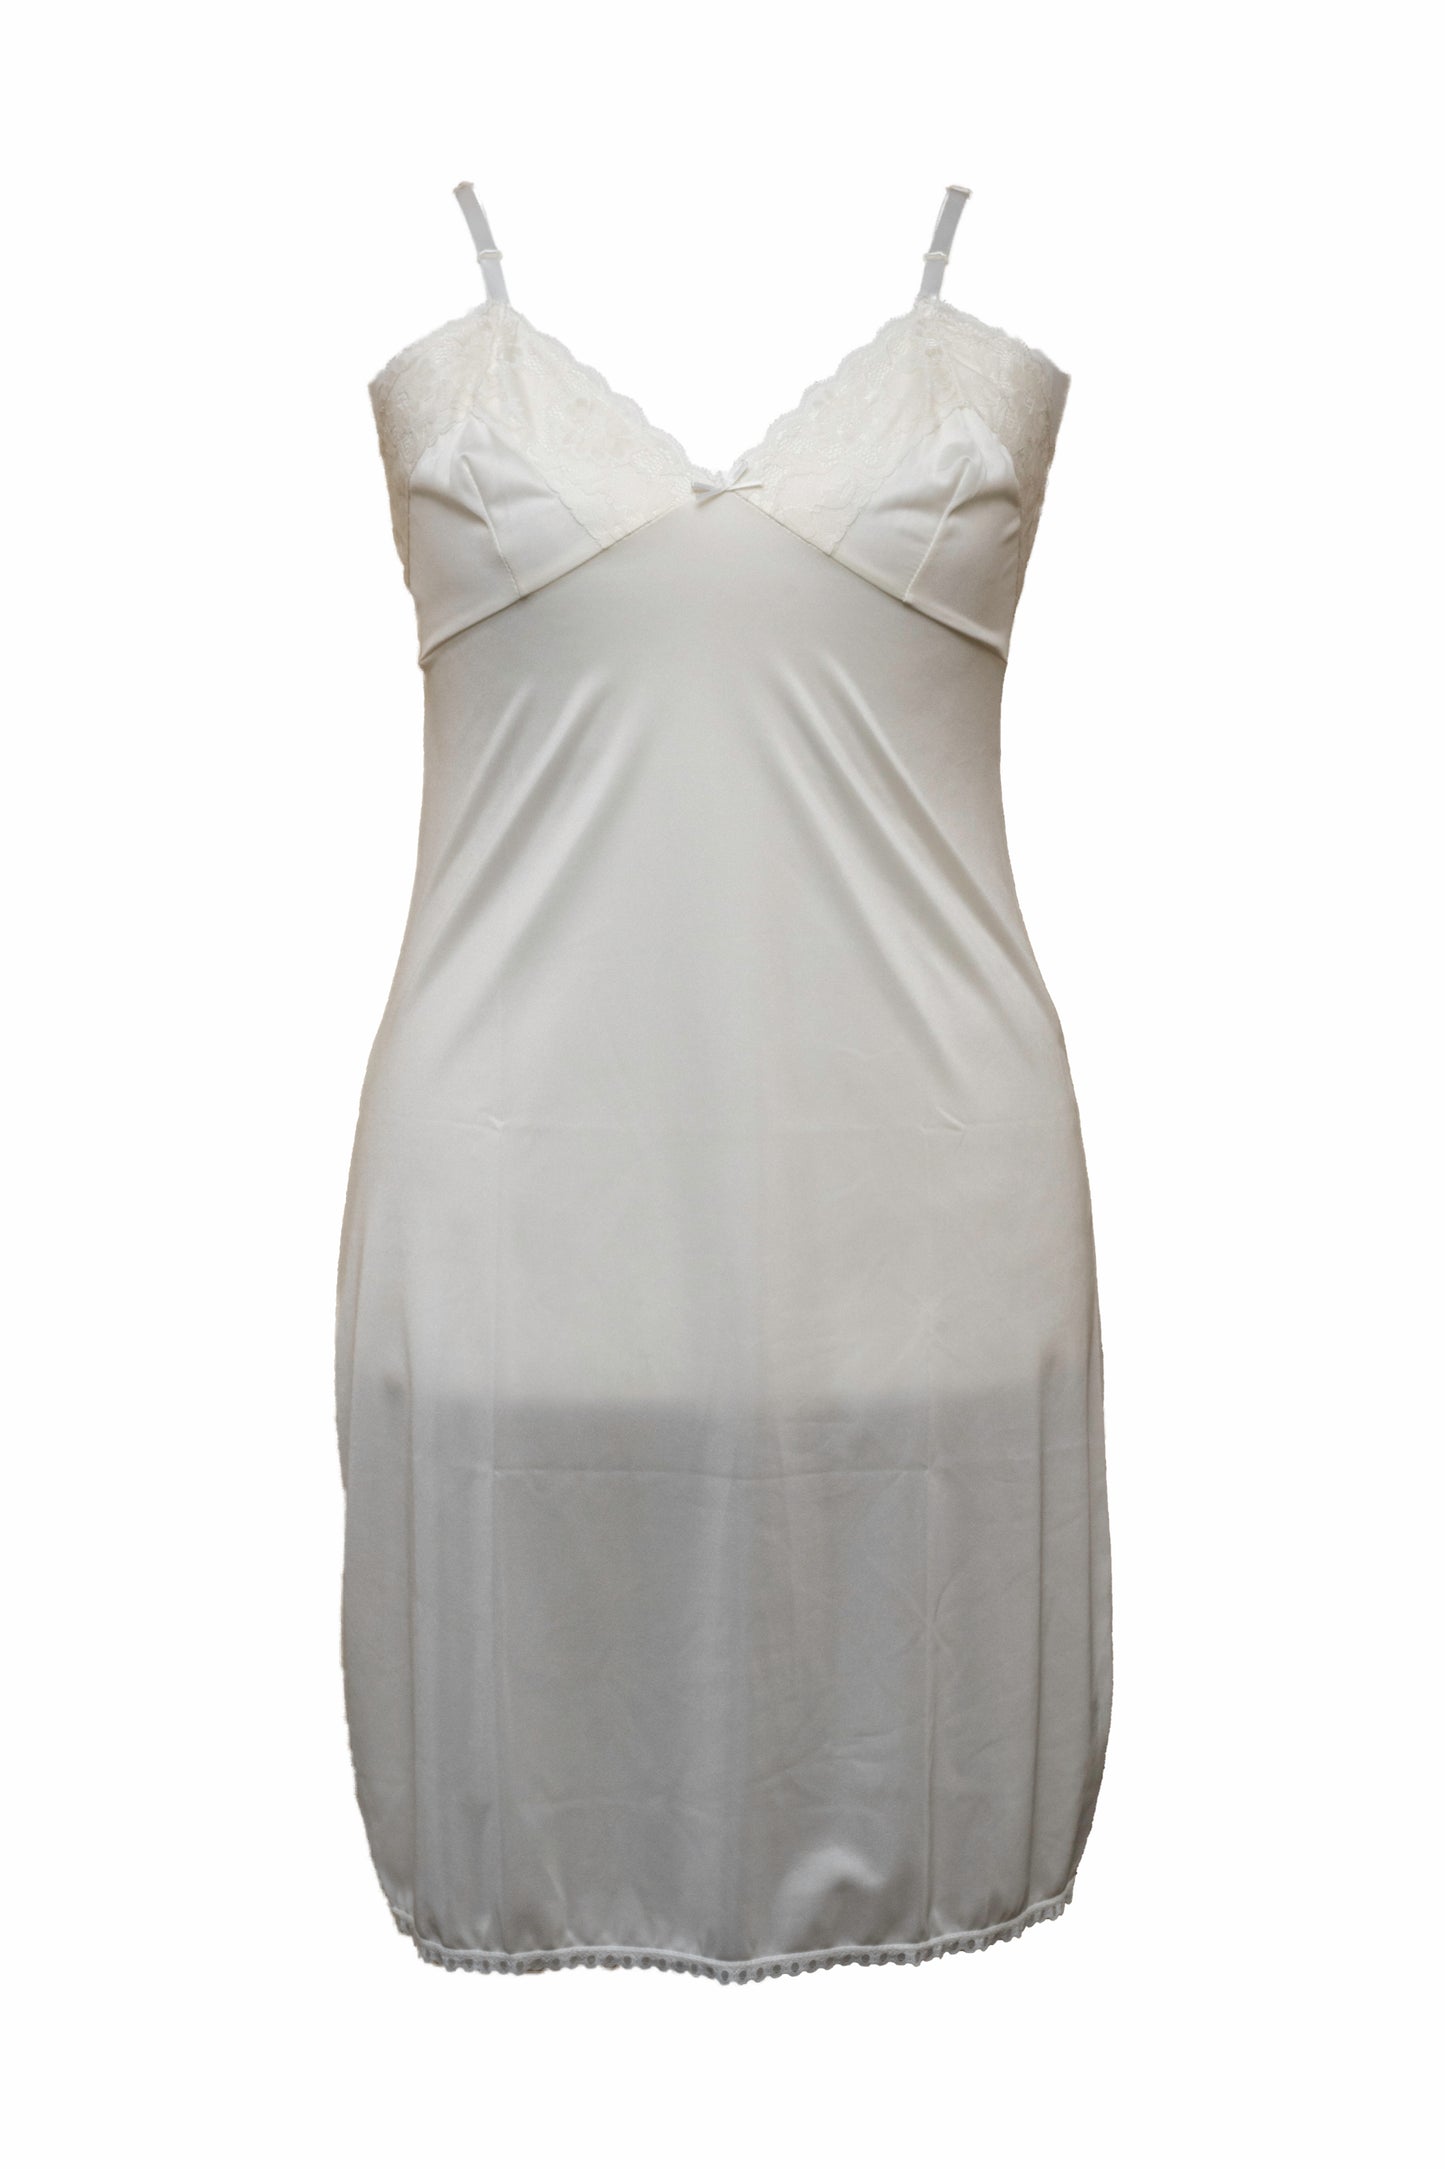 Ladies-Full Slip Petticoat-Ribbon Strap-White